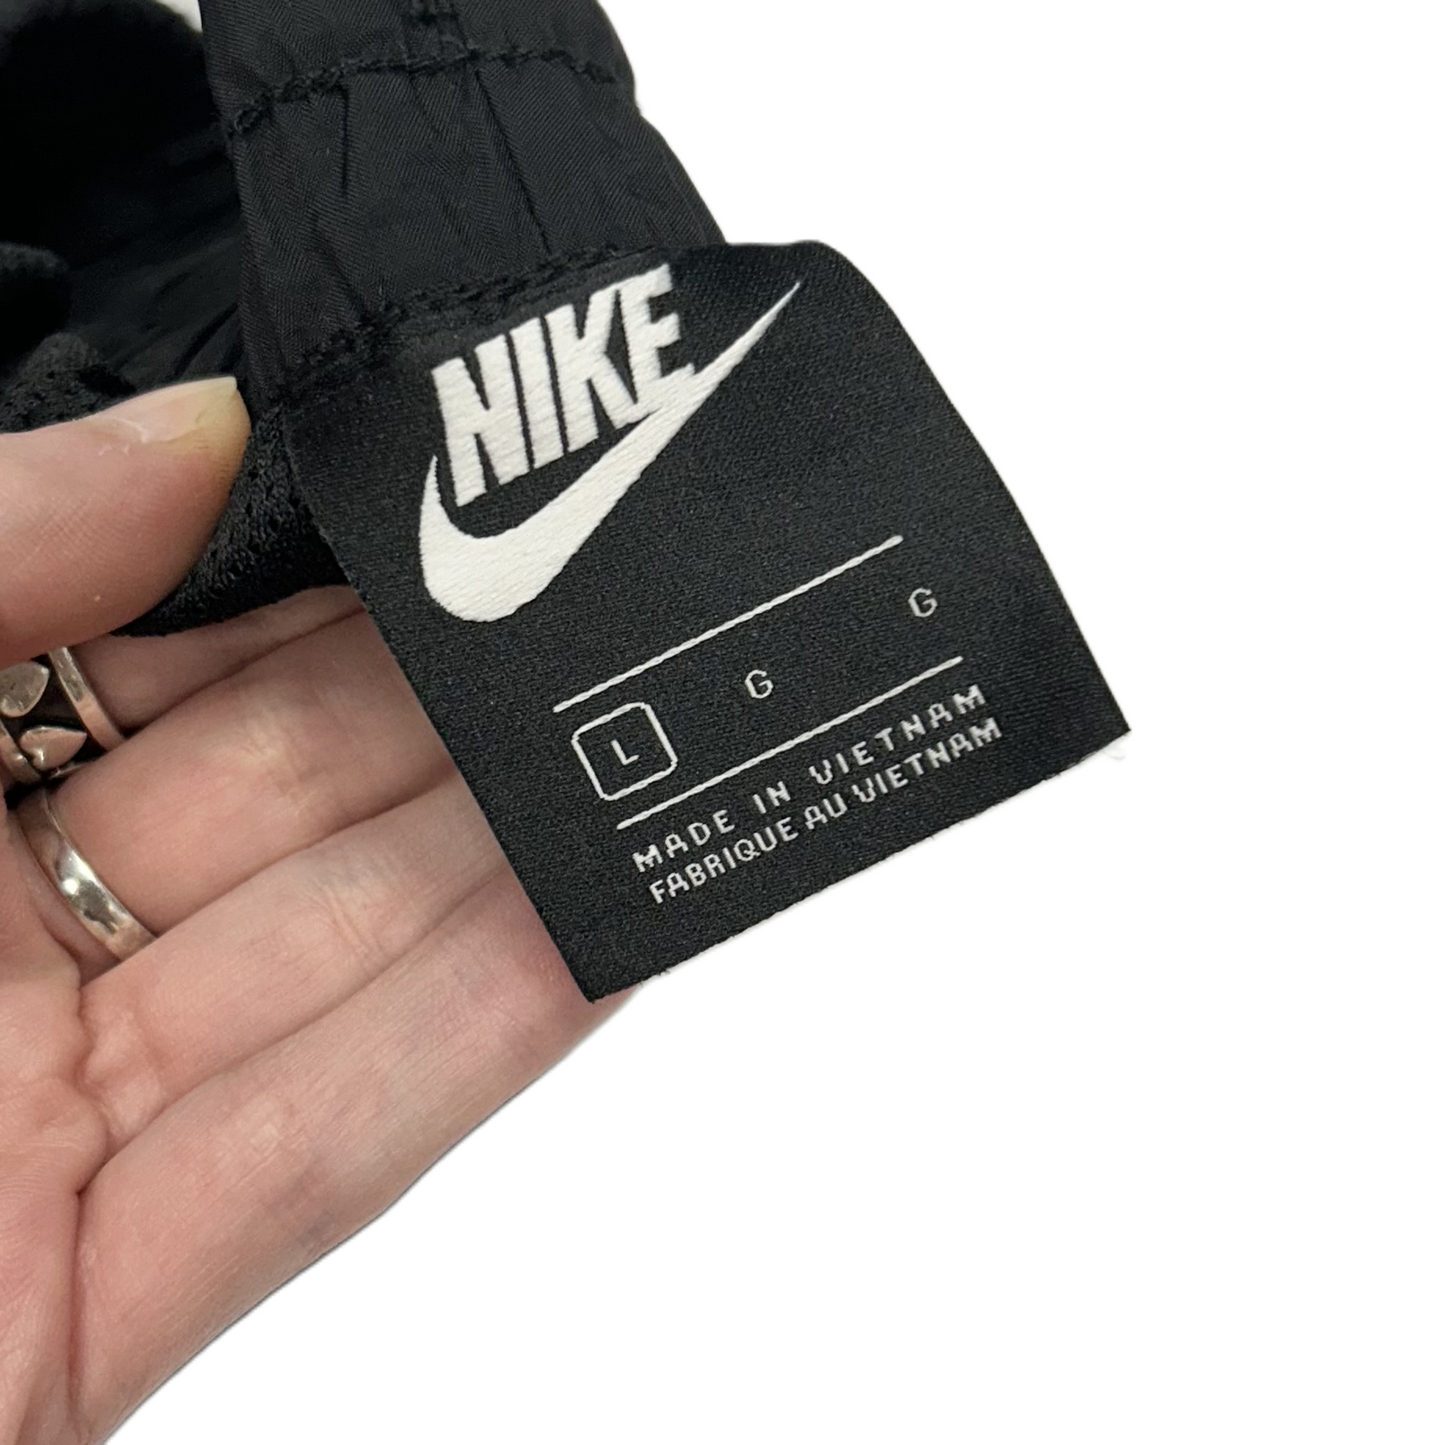 Black Athletic Pants By Nike Apparel, Size: L